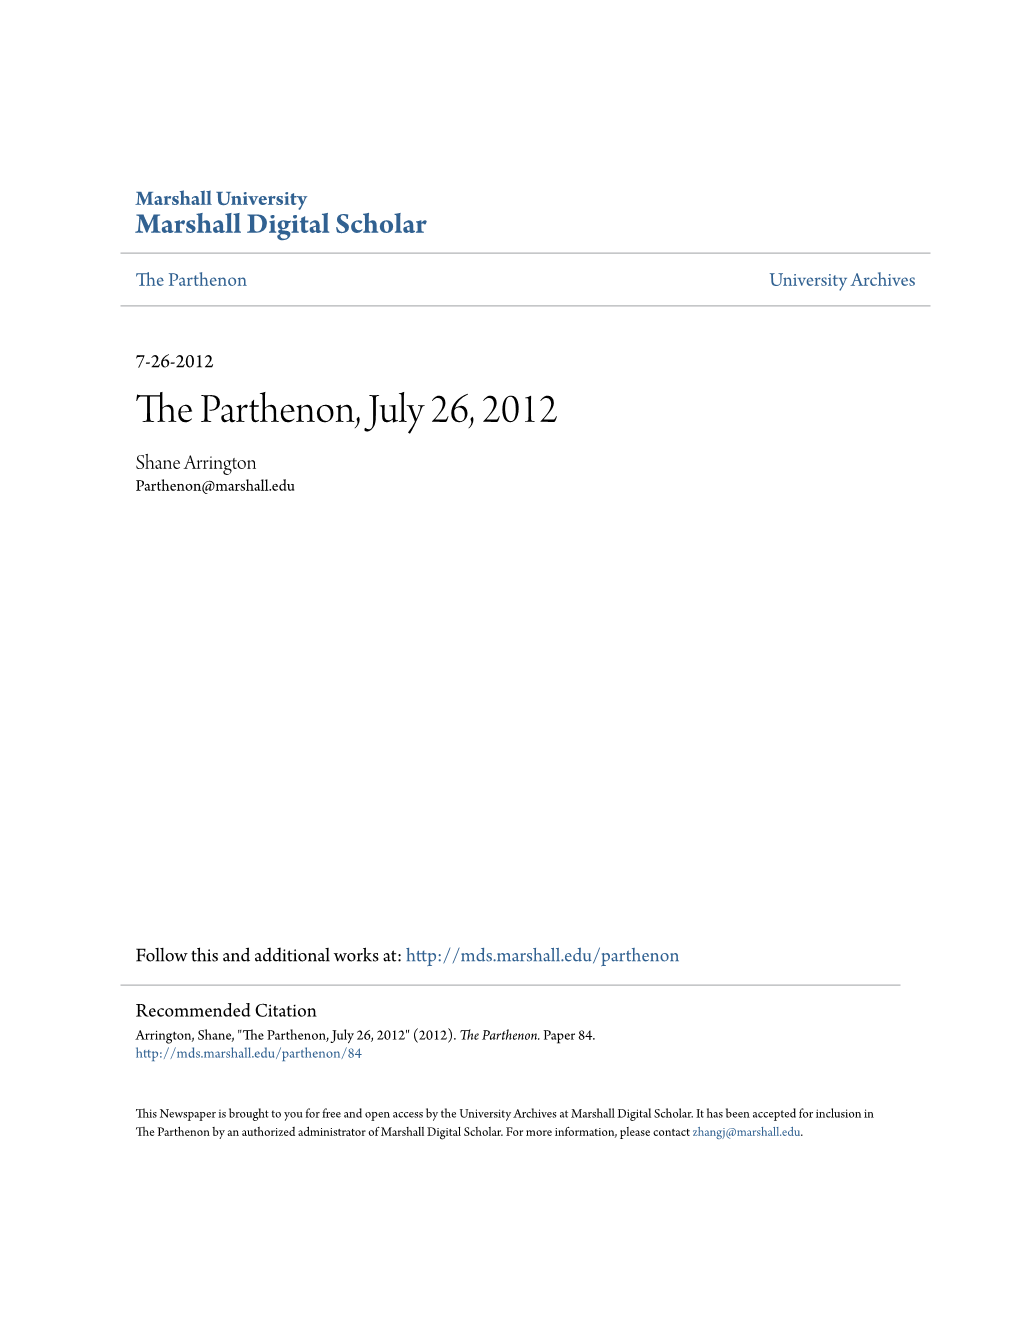 The Parthenon, July 26, 2012